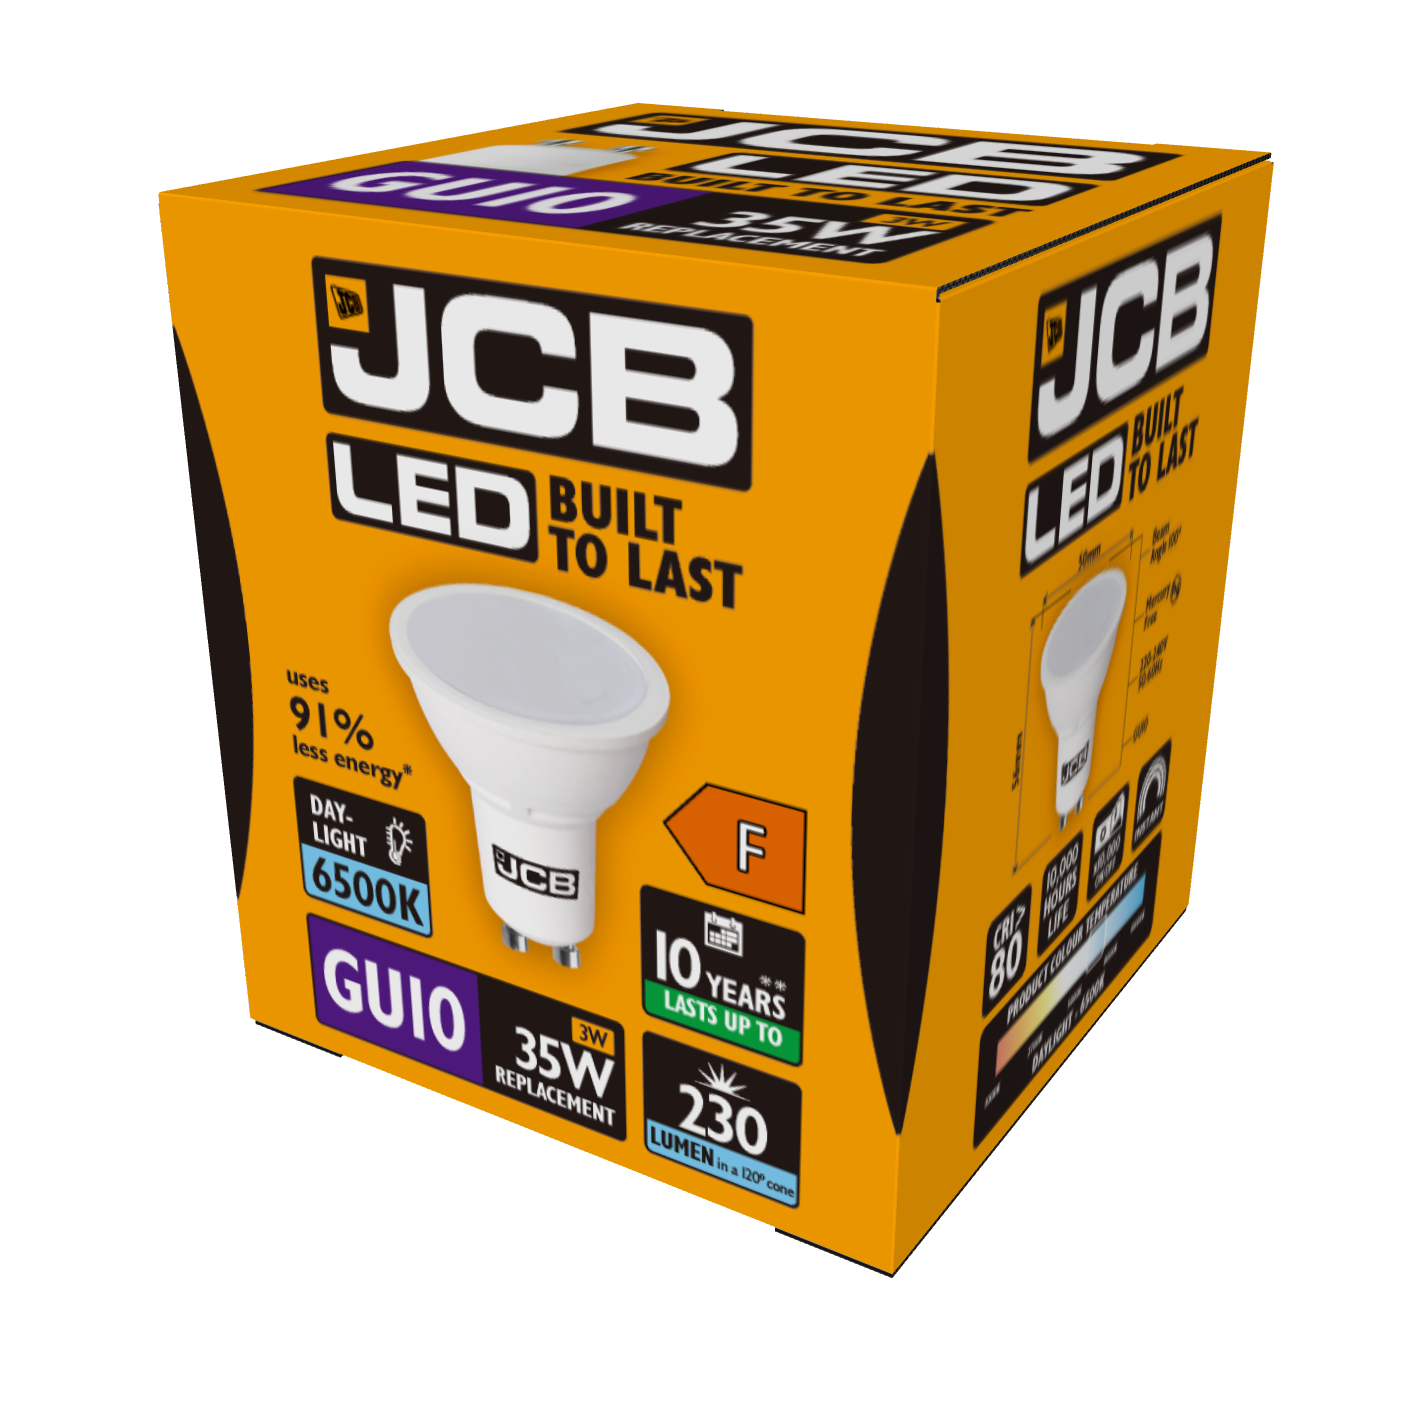 JCB LED GU10 250lm 4W 6,500K (Daylight), Box of 1